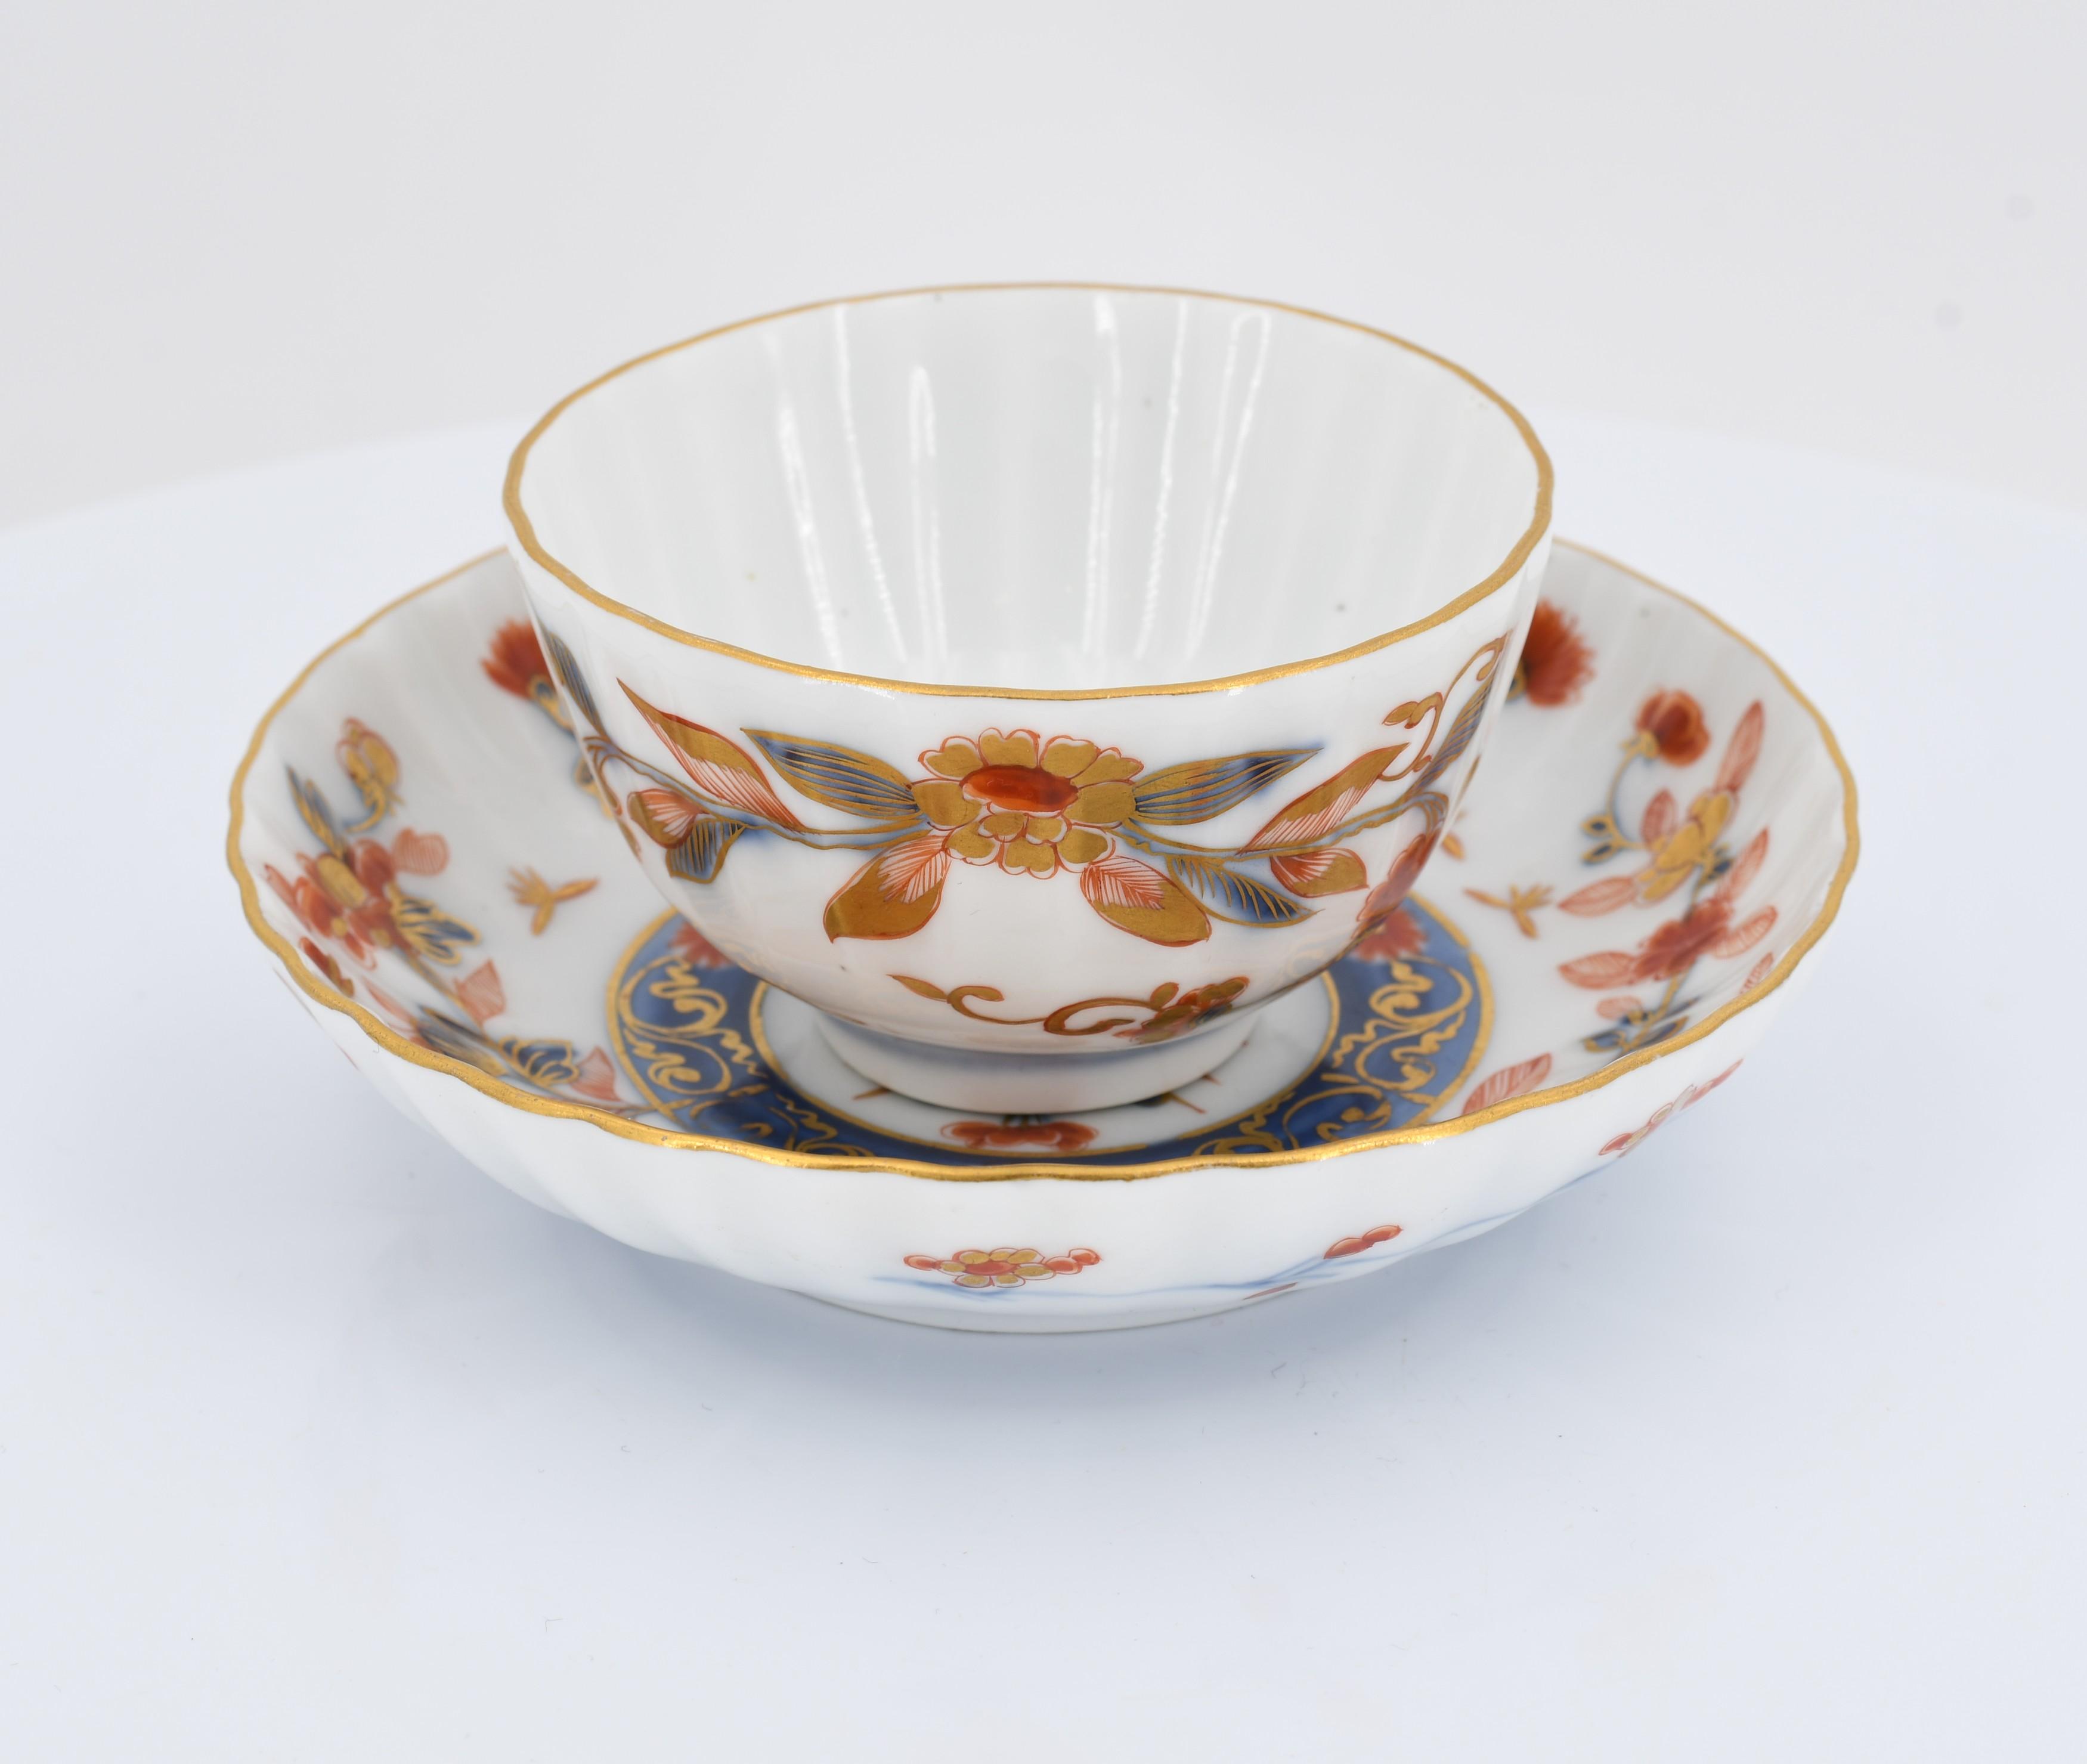 Tea bowl and saucer with Imari décor - Image 4 of 7